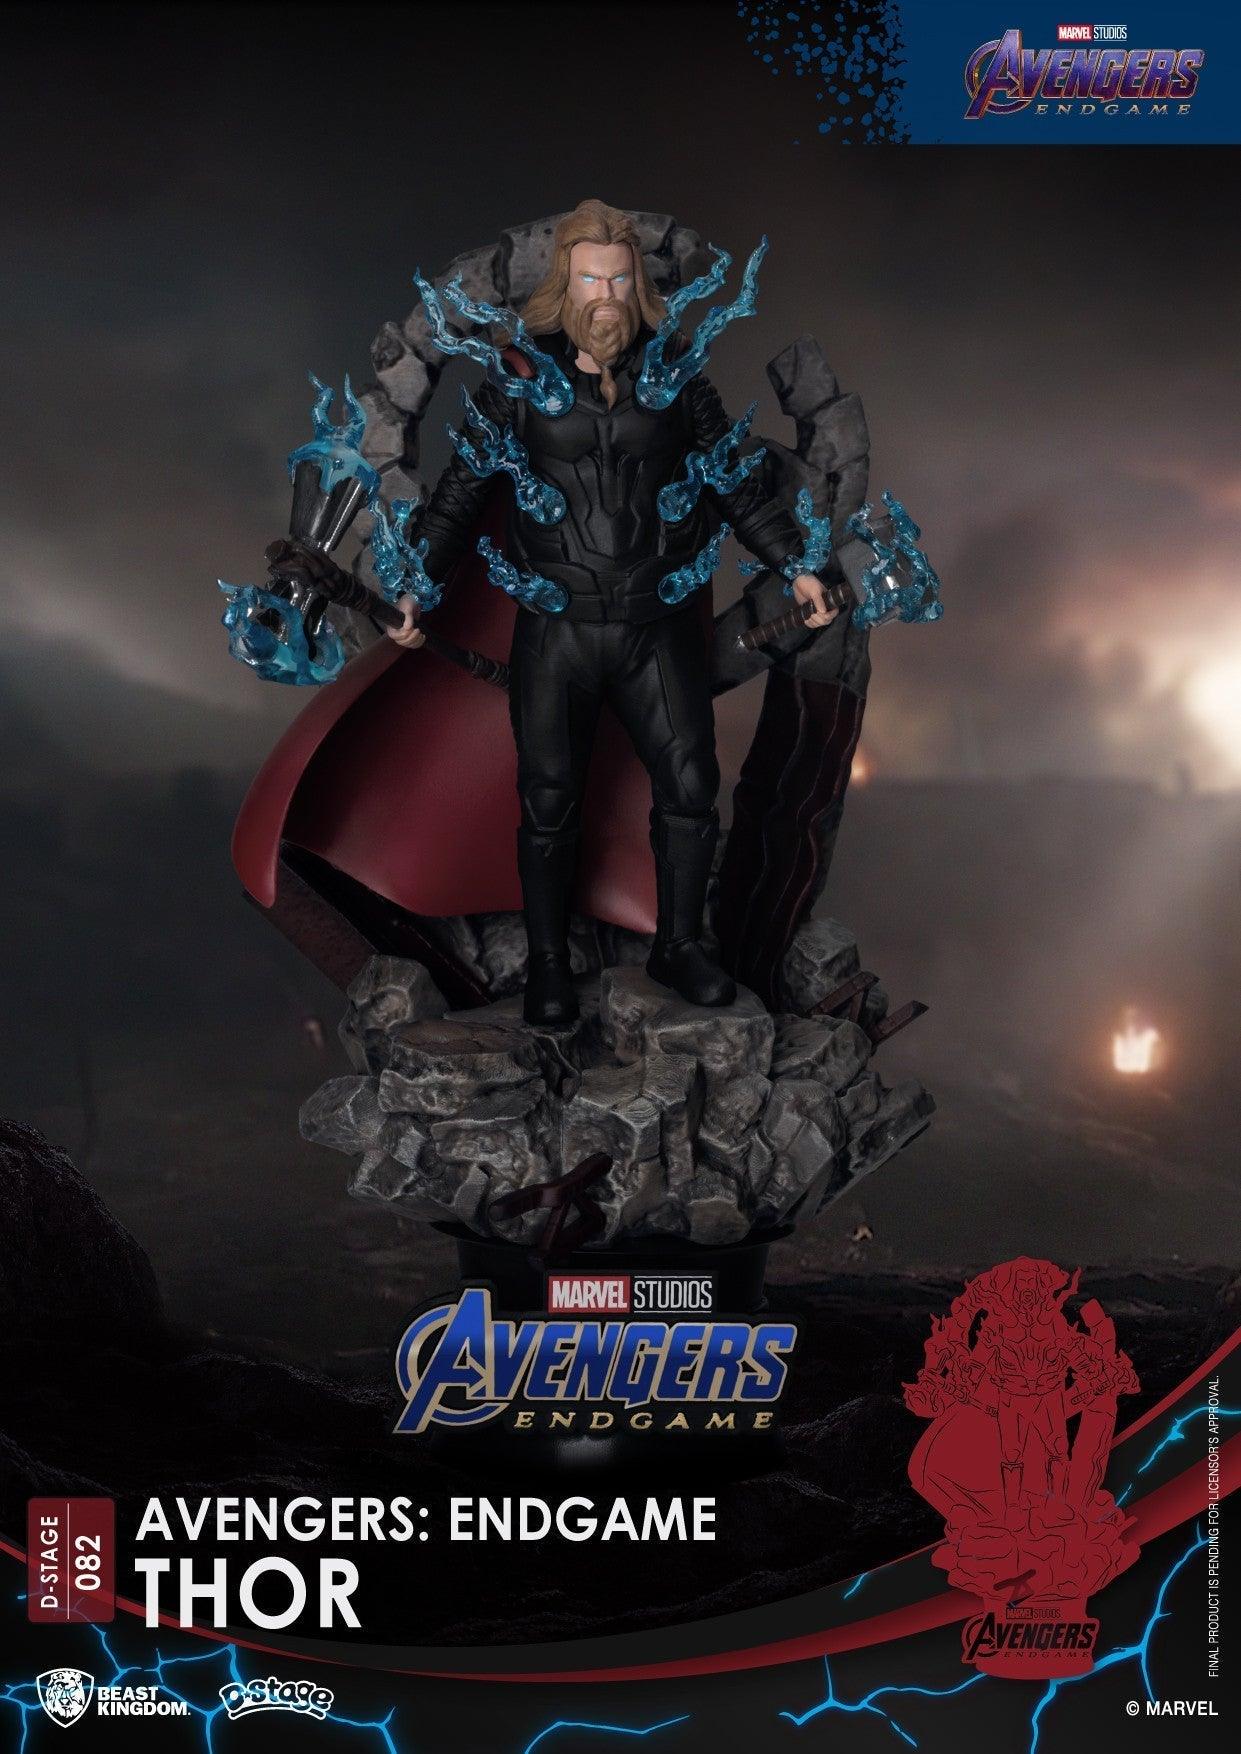 VR-95619 Beast Kingdom D Stage Avengers Endgame Thor - Beast Kingdom - Titan Pop Culture